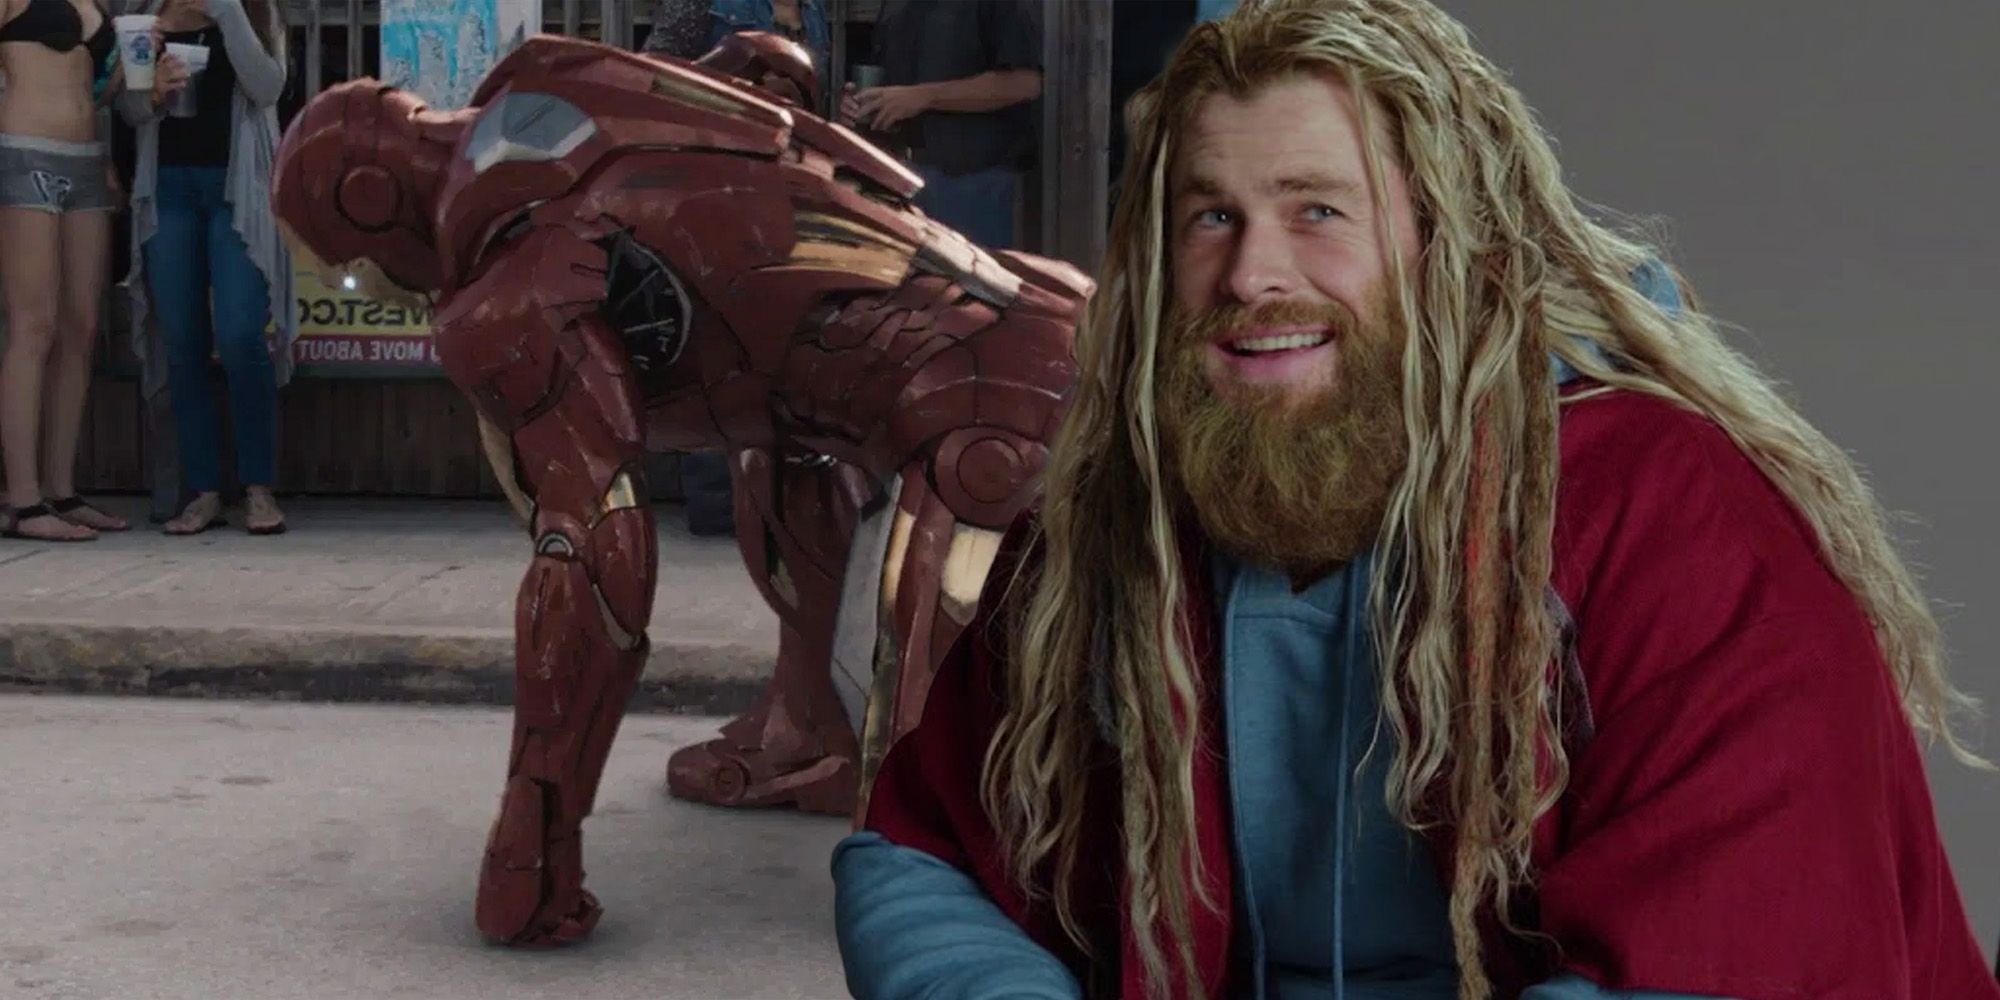 Fat-Thor-Avengers-endgame-Iron-man-3-panic-attack